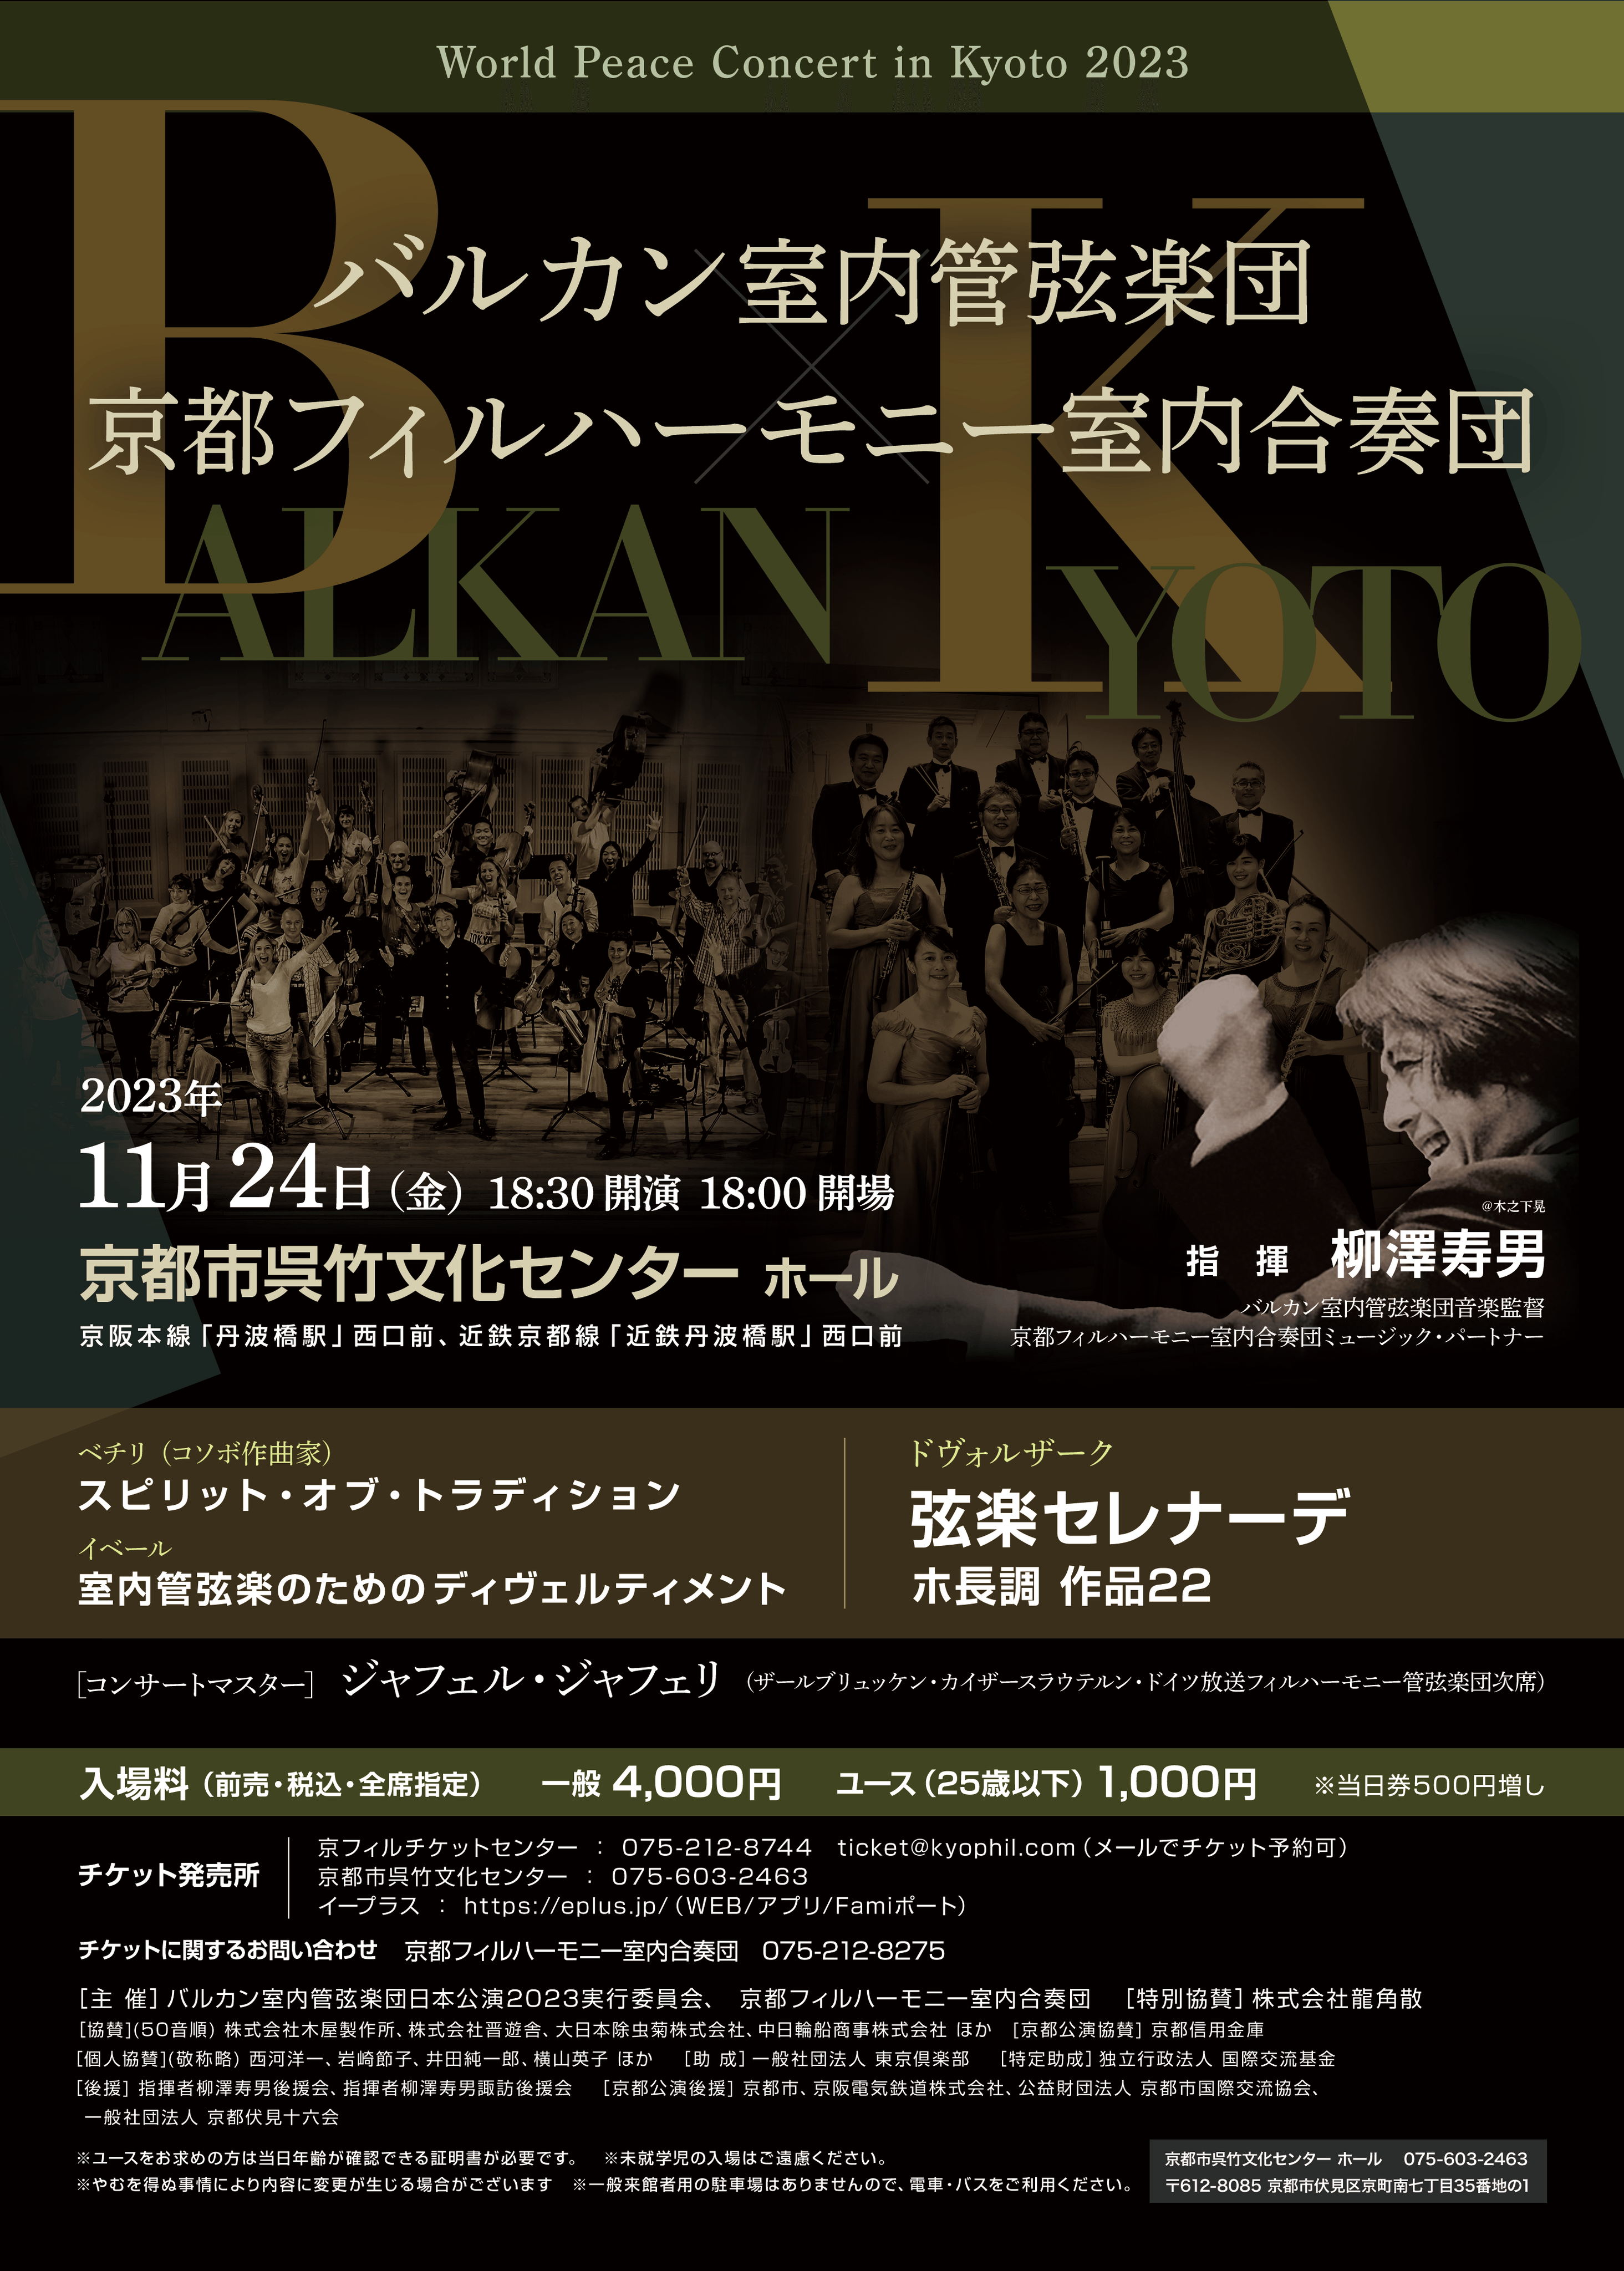 11/24 World Peace Concert in Kyoto 2023 バルカン室内管弦楽団を迎え